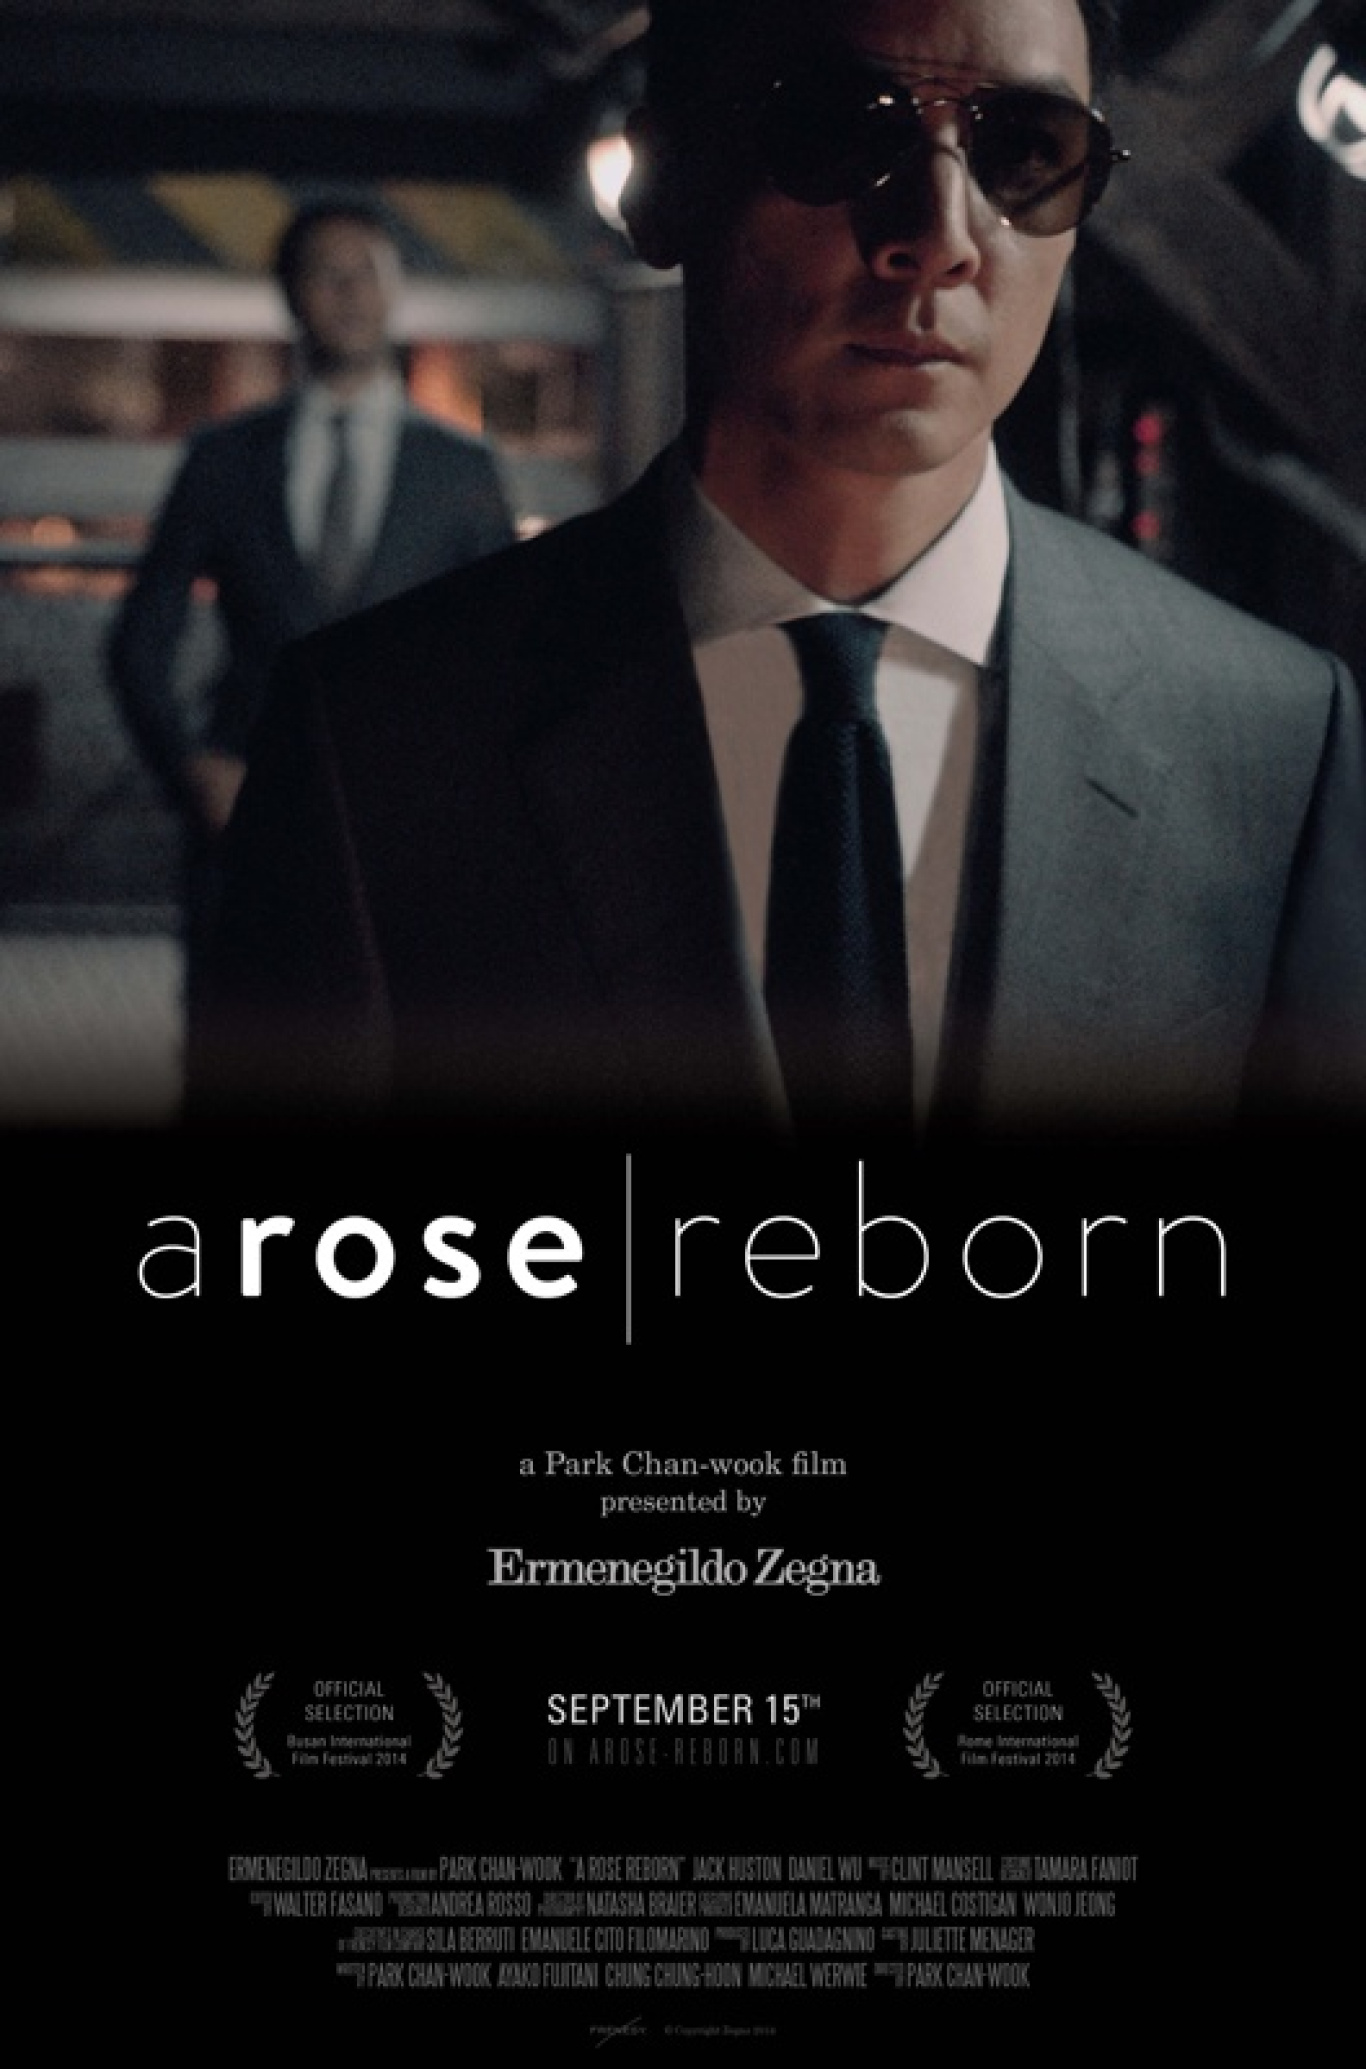 “A Rose Reborn”, a film by Ermenegildo Zegna